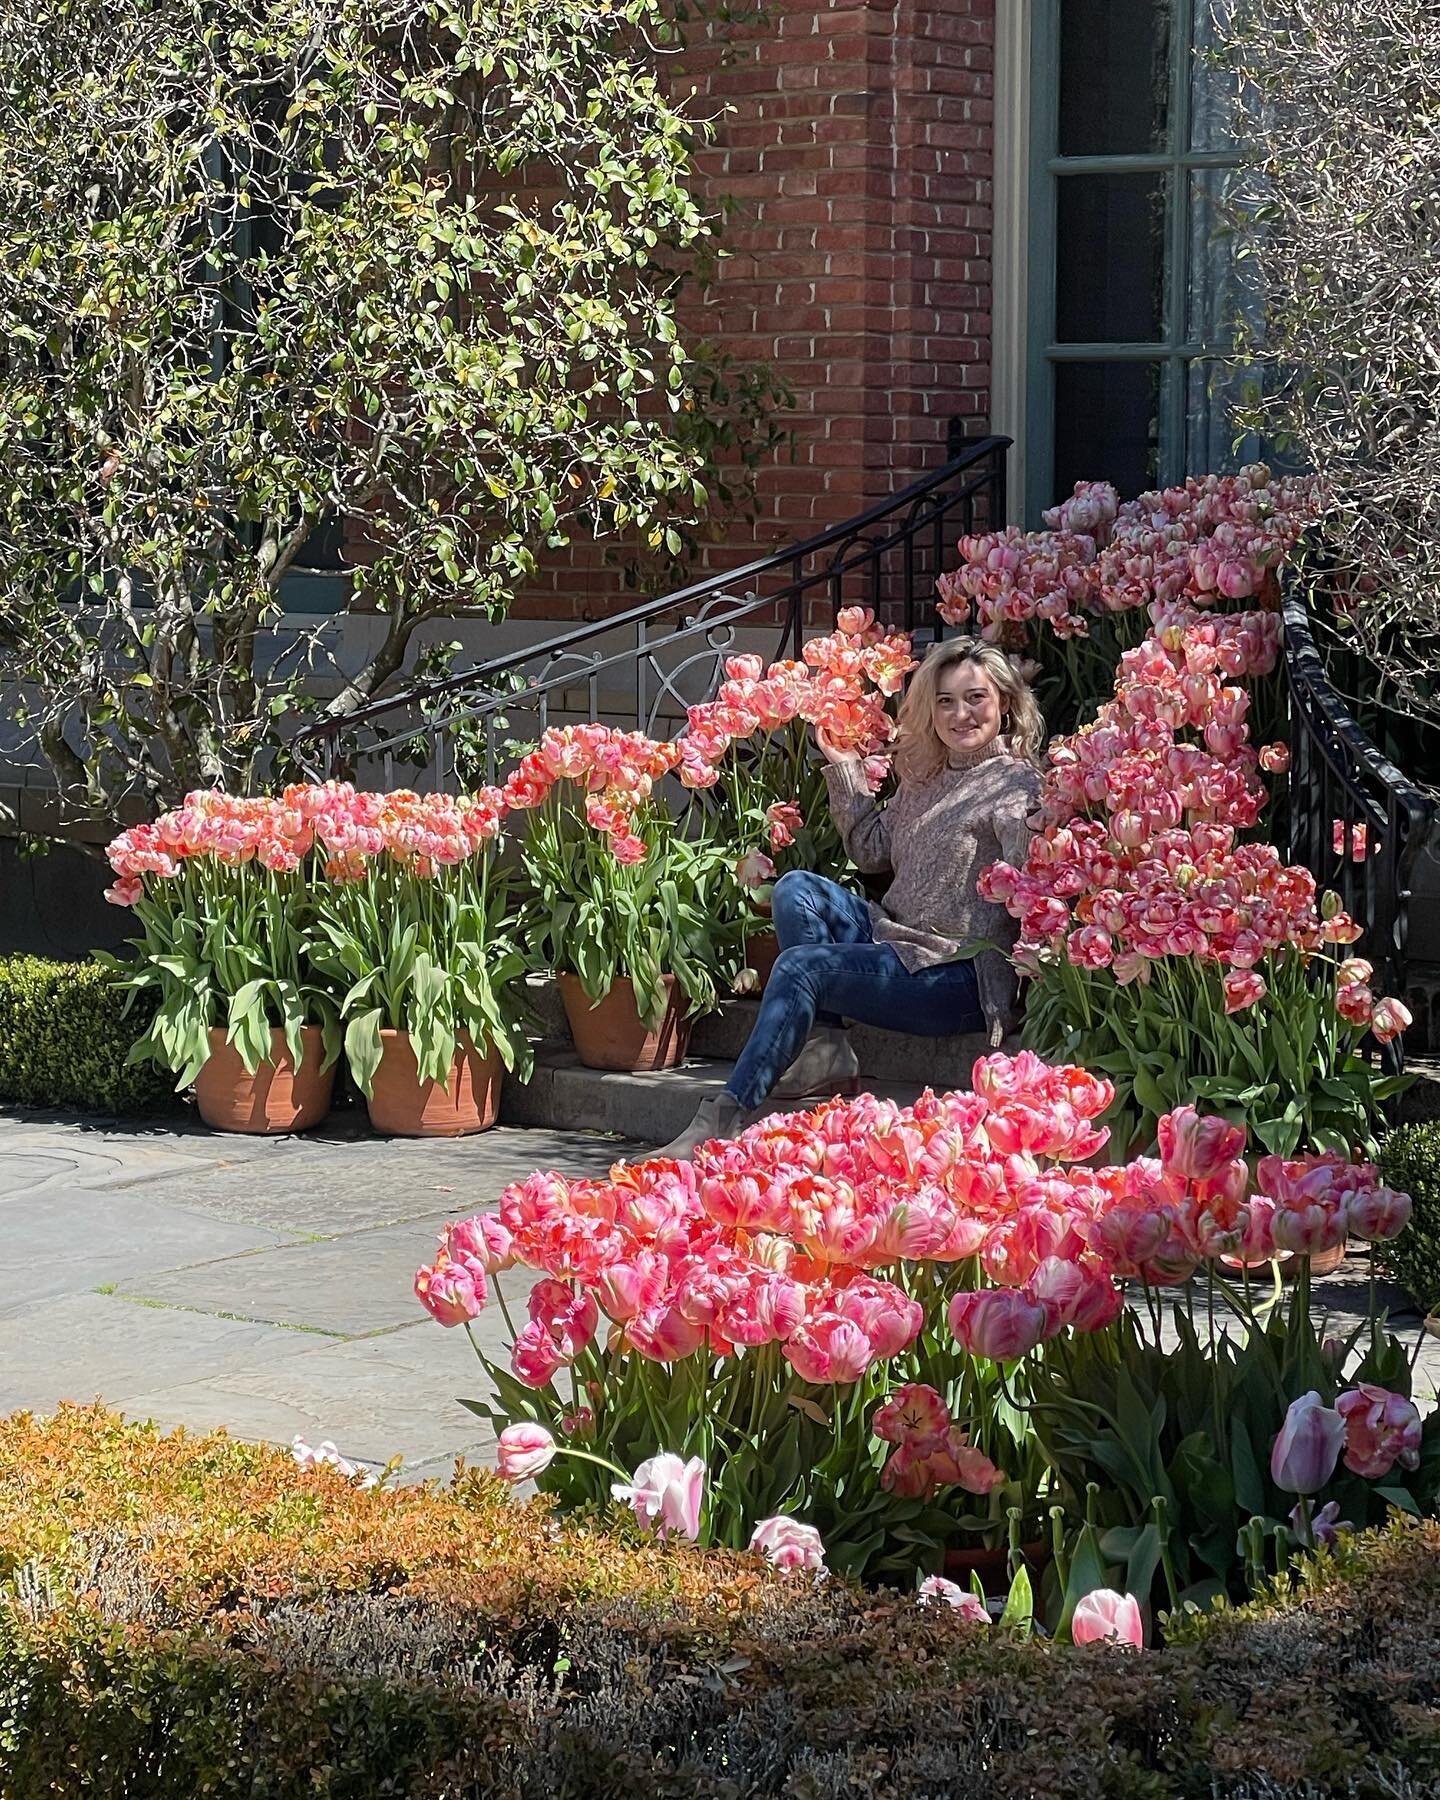 Annual spring visit 🌷 

#filoligarden #filolihouse #filoli #woodside #tulips #garden #flowers #flowerstagram #tulips🌷 #northcalifornia #norcal #siliconvalley #sfbayarea